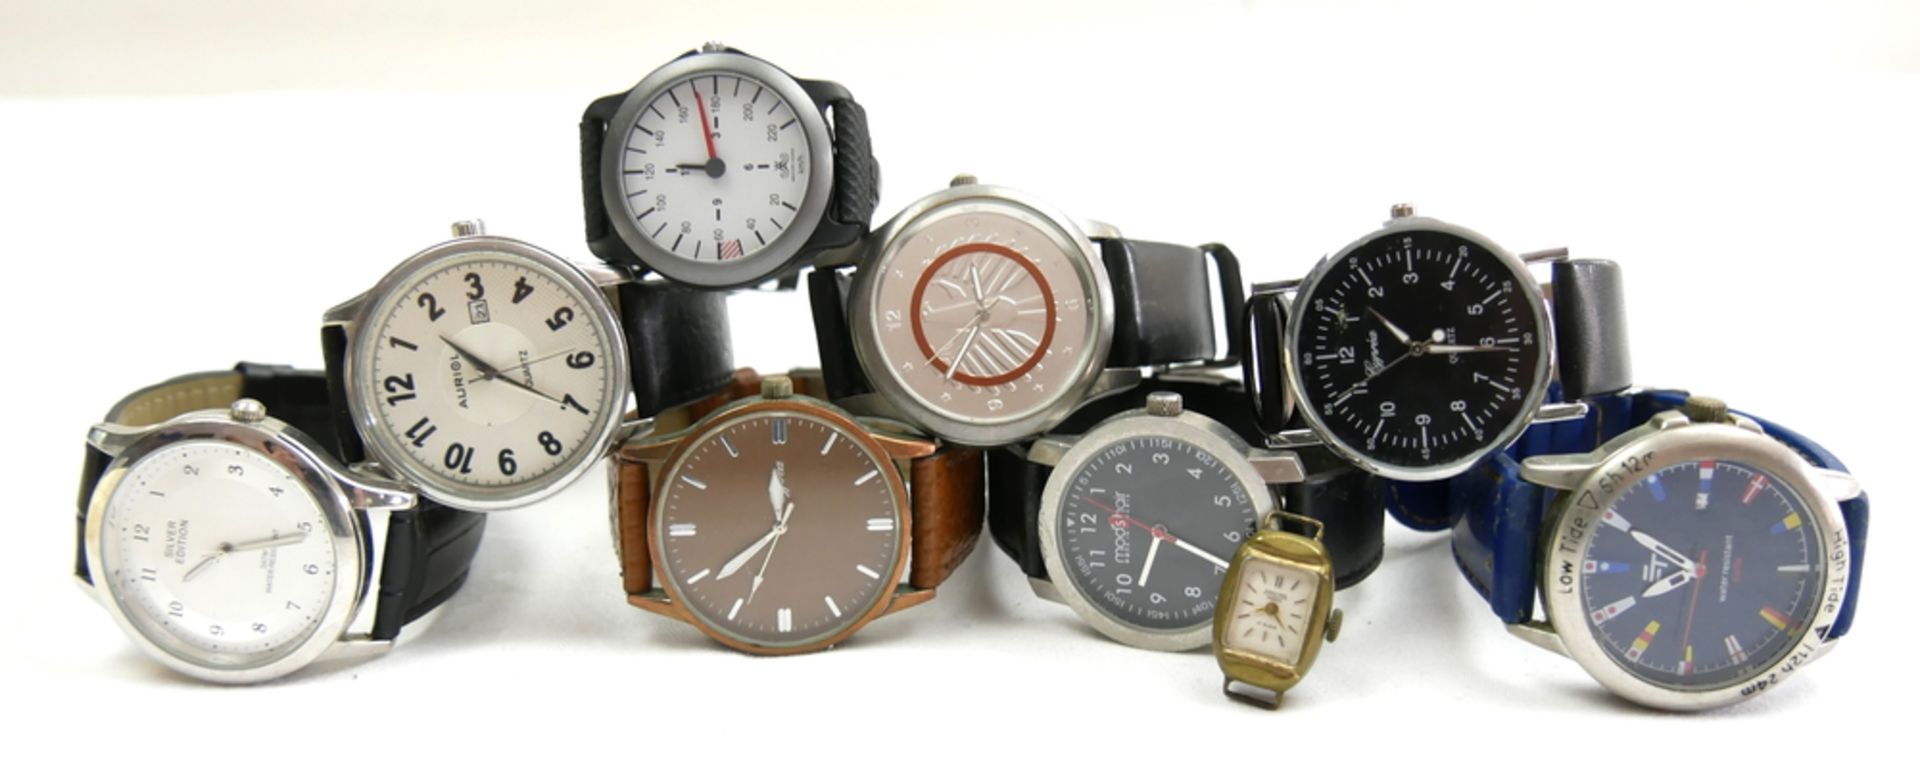 Großes Lot Armbanduhren, verschiedene Modelle. Bitte besichtigen!